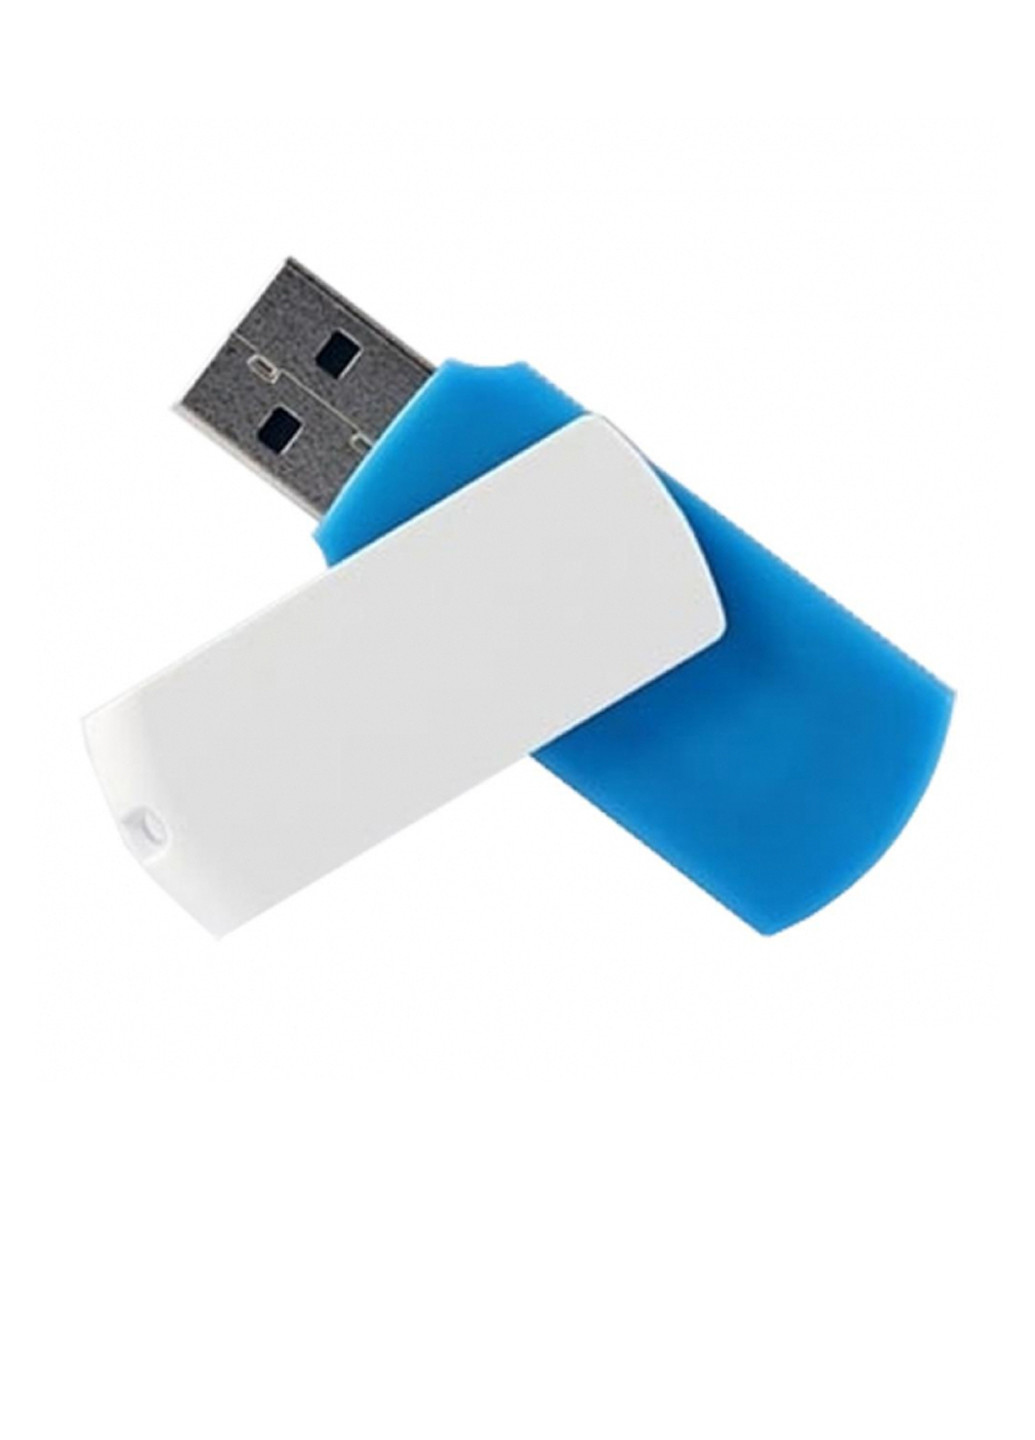 Флеш пам'ять USB 16GB UCO2 USB 2.0 Colour Mix (UCO2-0160MXR11) Goodram флеш память usb goodram 16gb uco2 usb 2.0 colour mix (uco2-0160mxr11) (136742758)